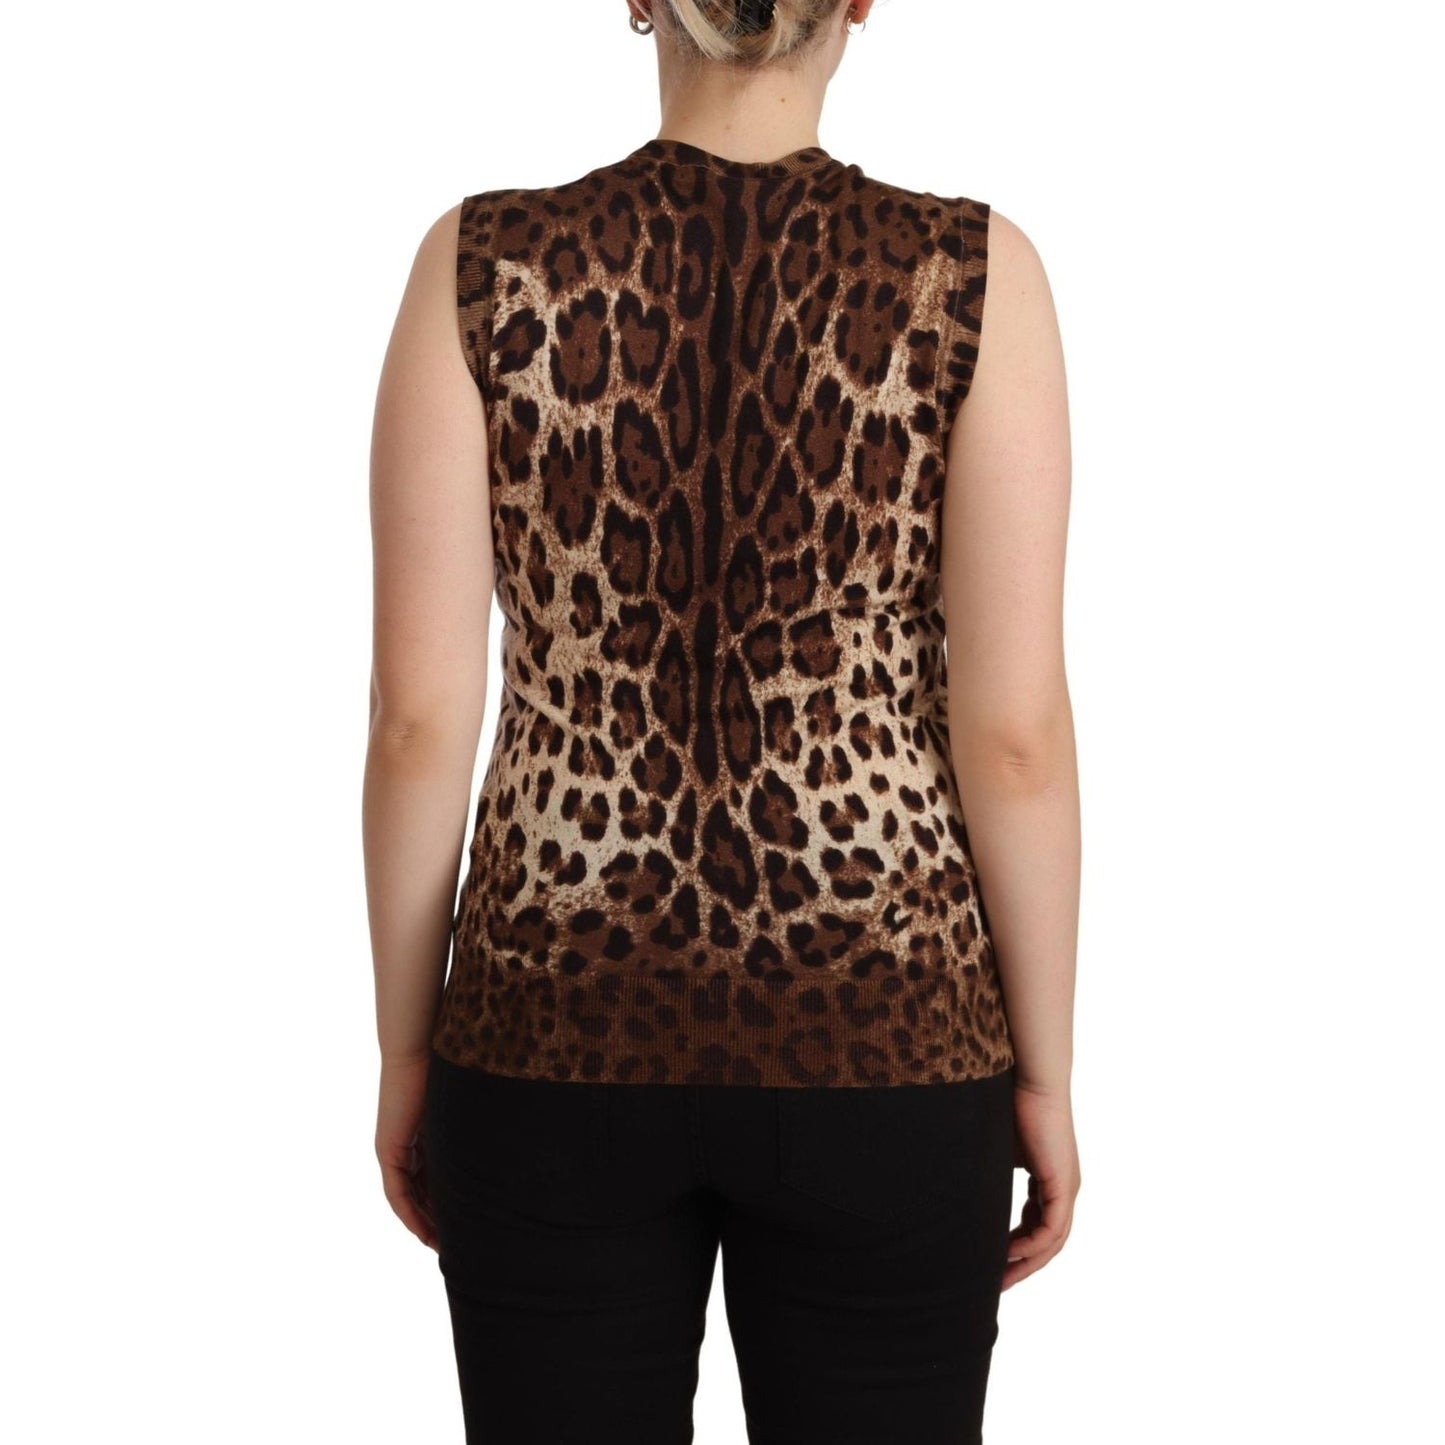 Dolce & Gabbana Chic Leopard Silk Cashmere Sleeveless Top brown-leopard-cashmere-silk-tank-blouse-top